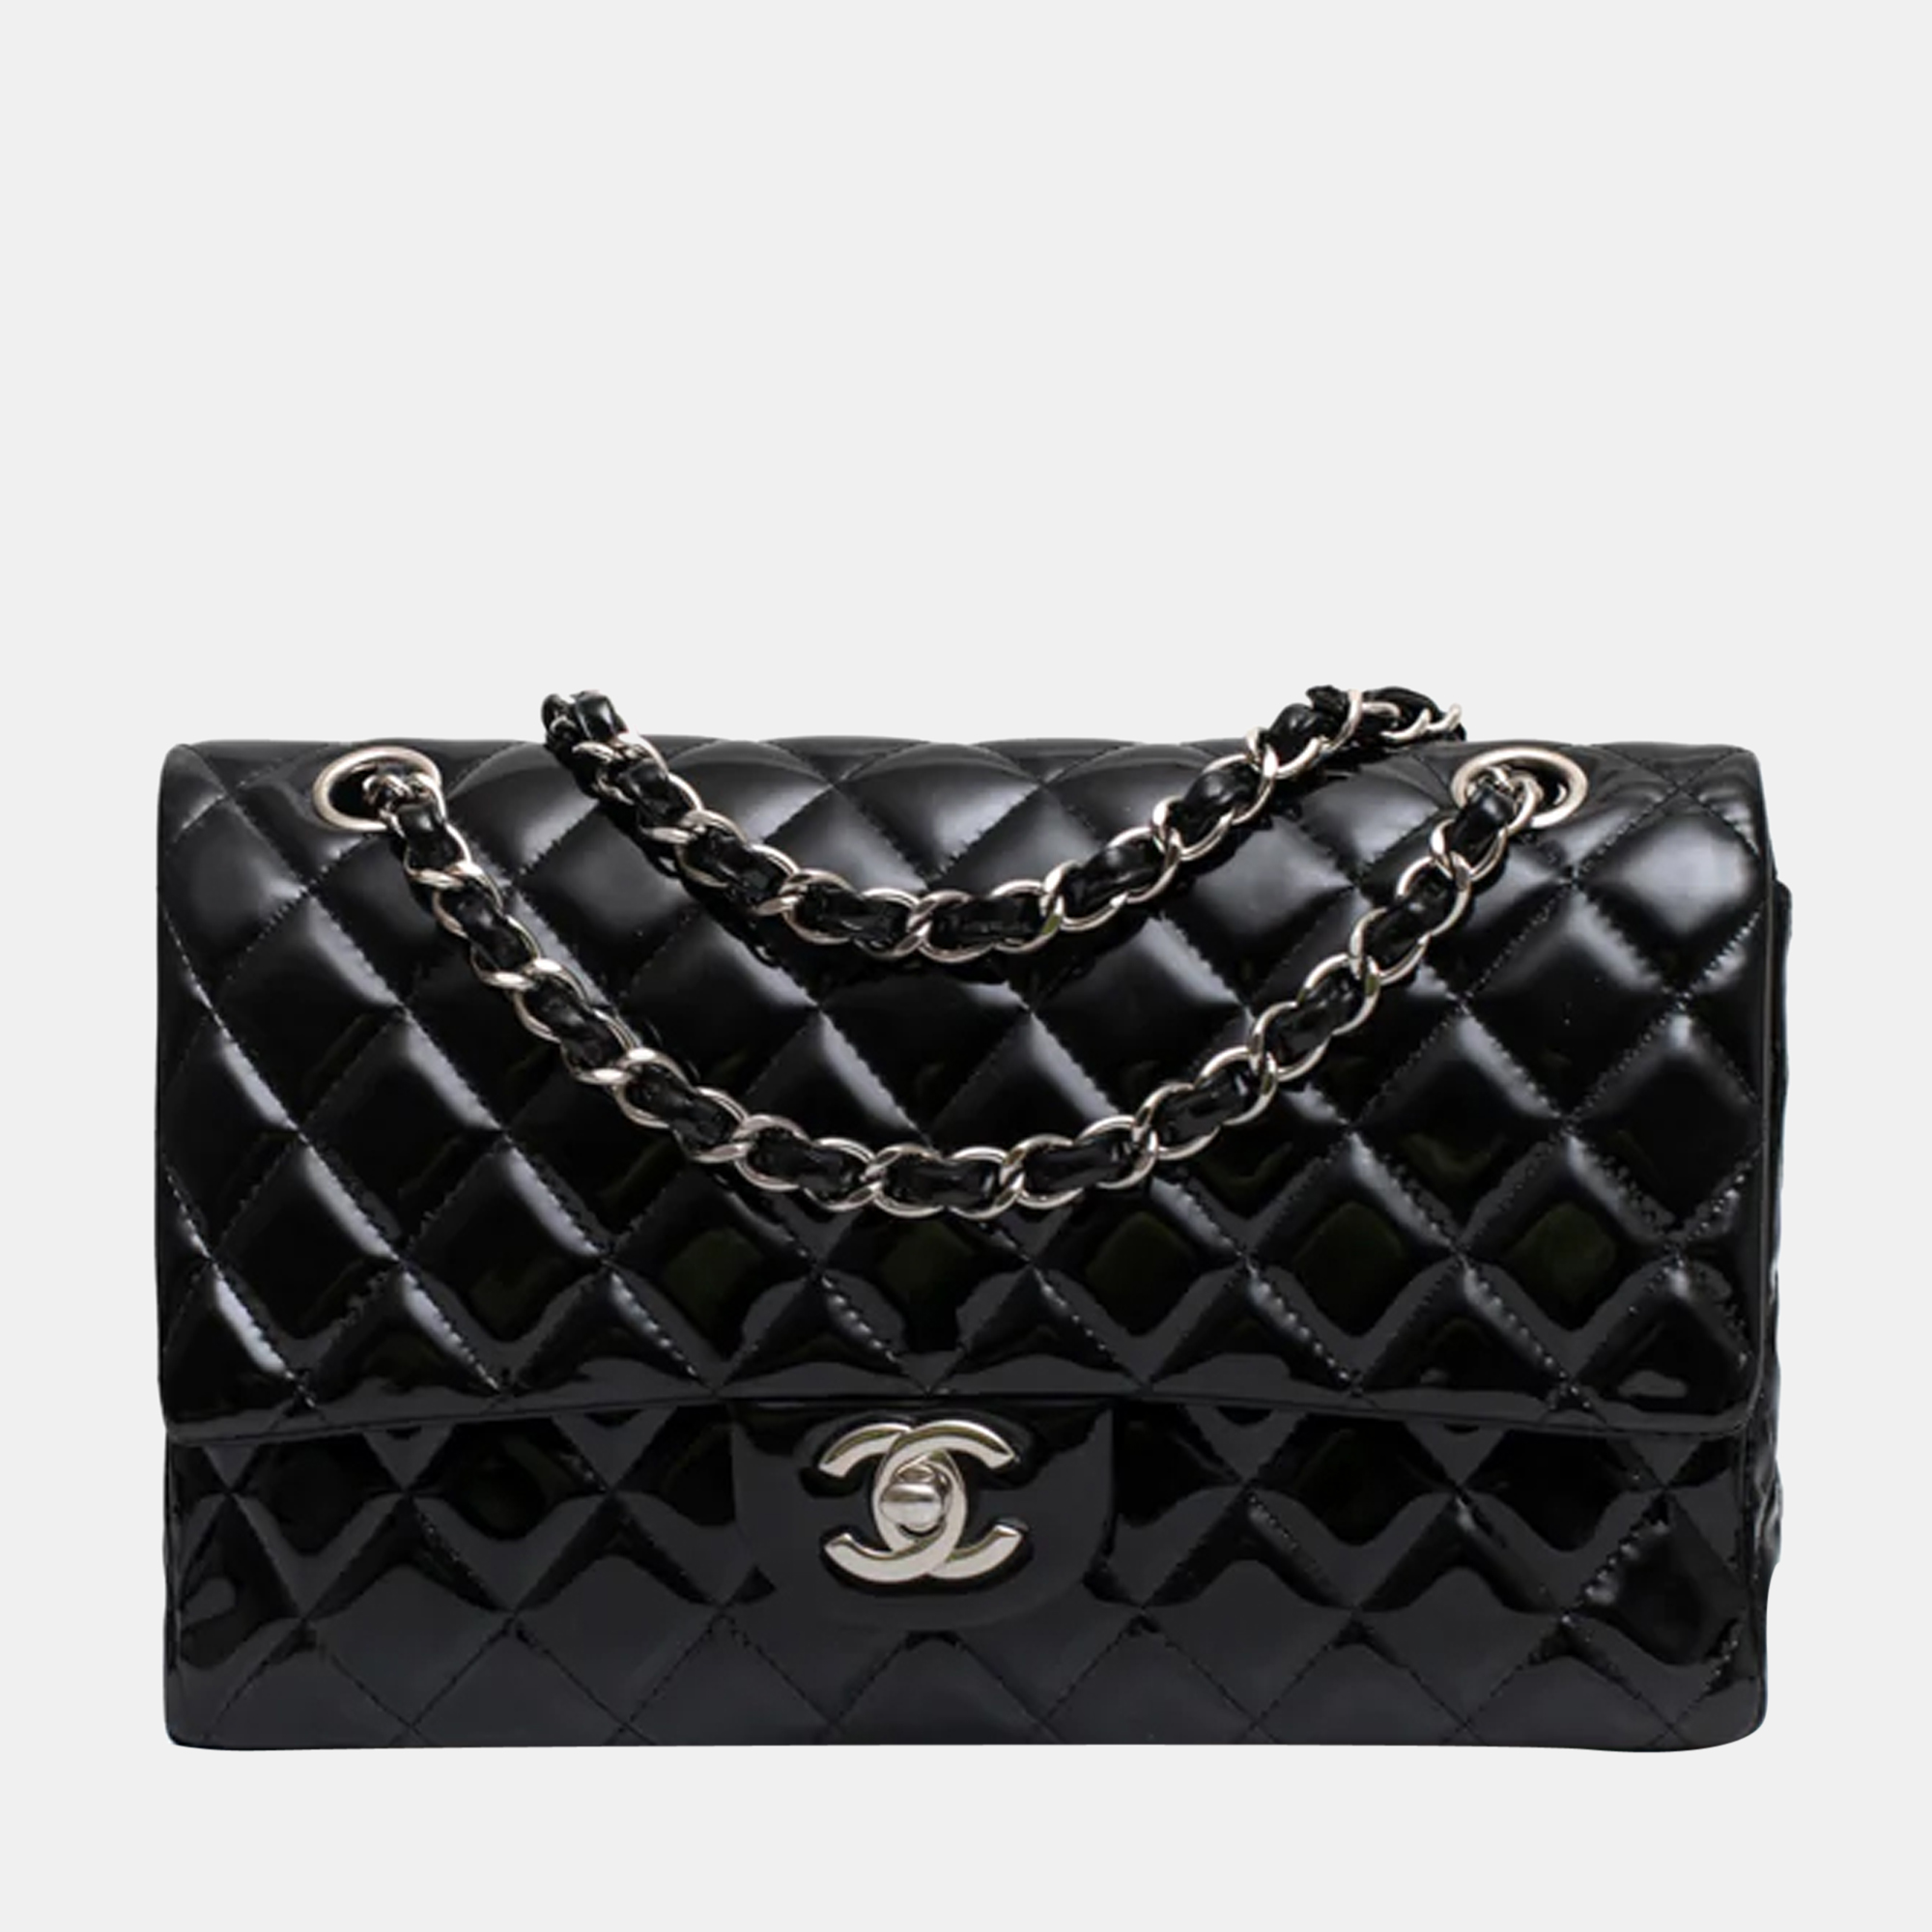 Chanel Black Patent Leather Medium Classic Double Flap Bag